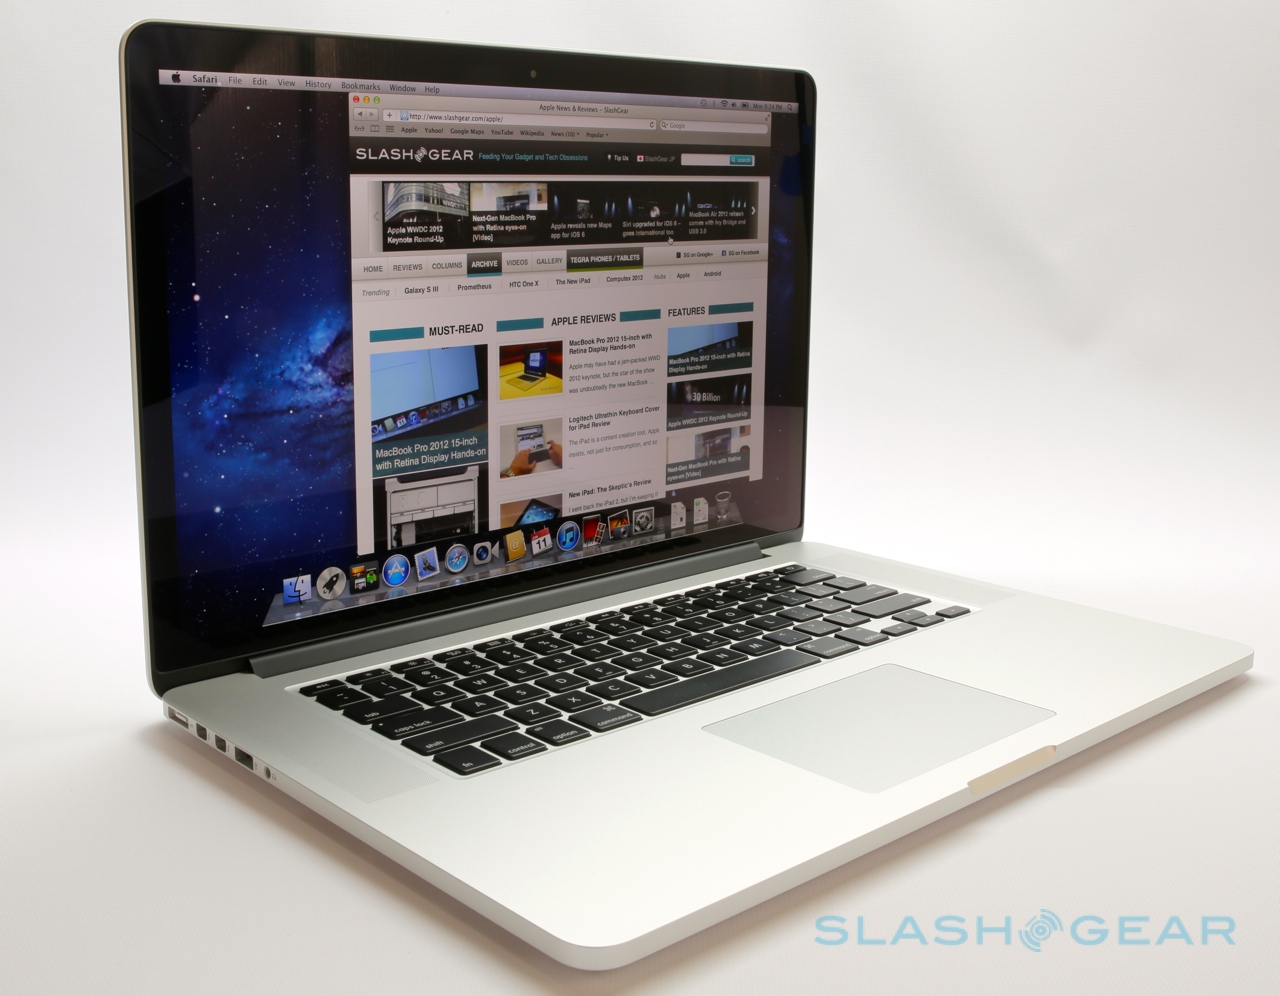 MacBook Pro 2012 15-inch with Retina Display Hands-on - SlashGear